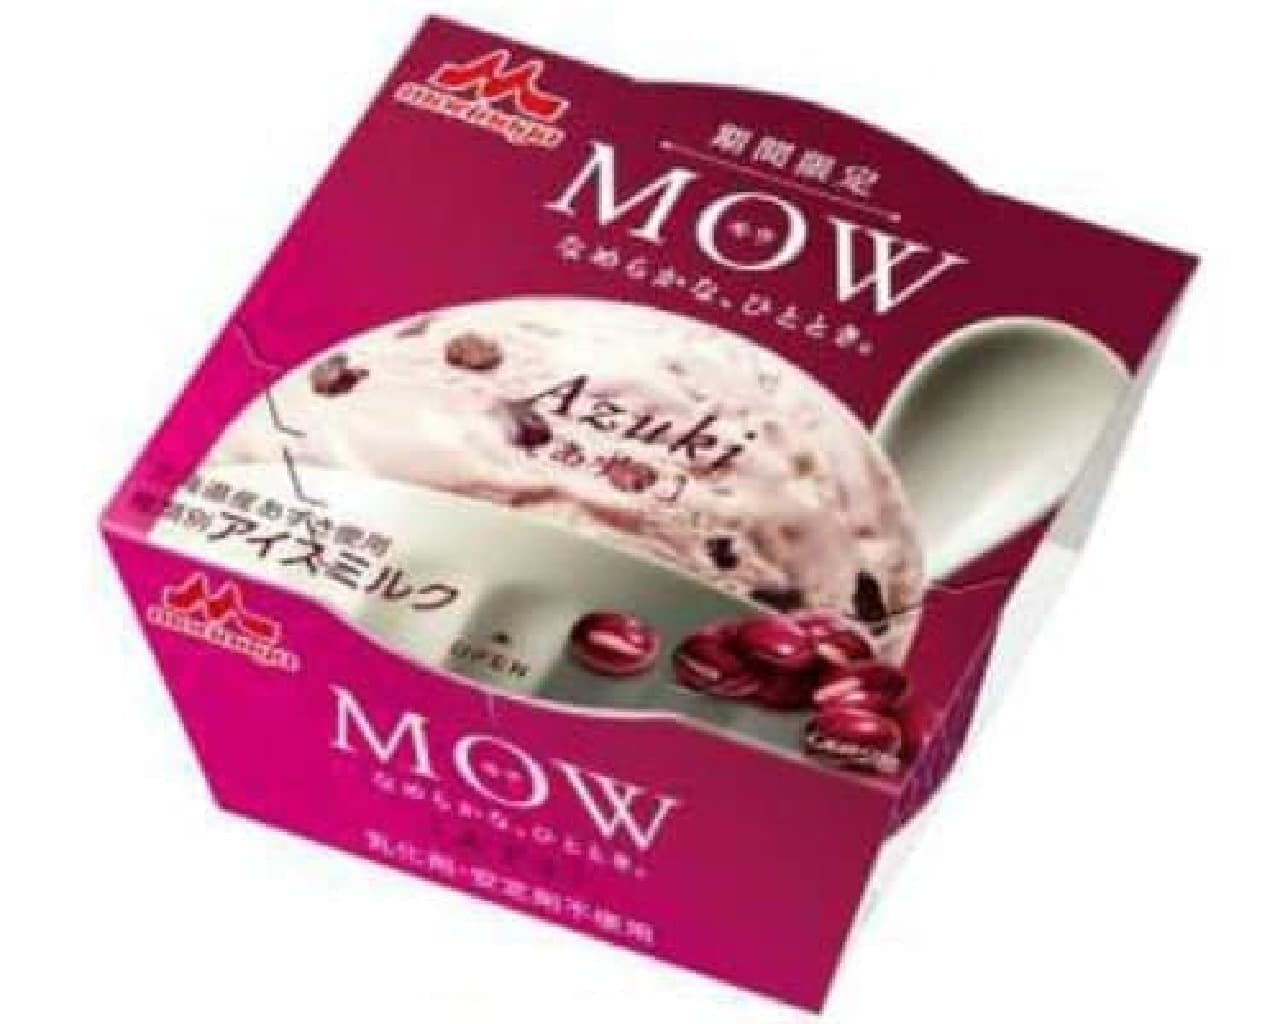 MOW's limited fall/winter flavor "Adzuki".